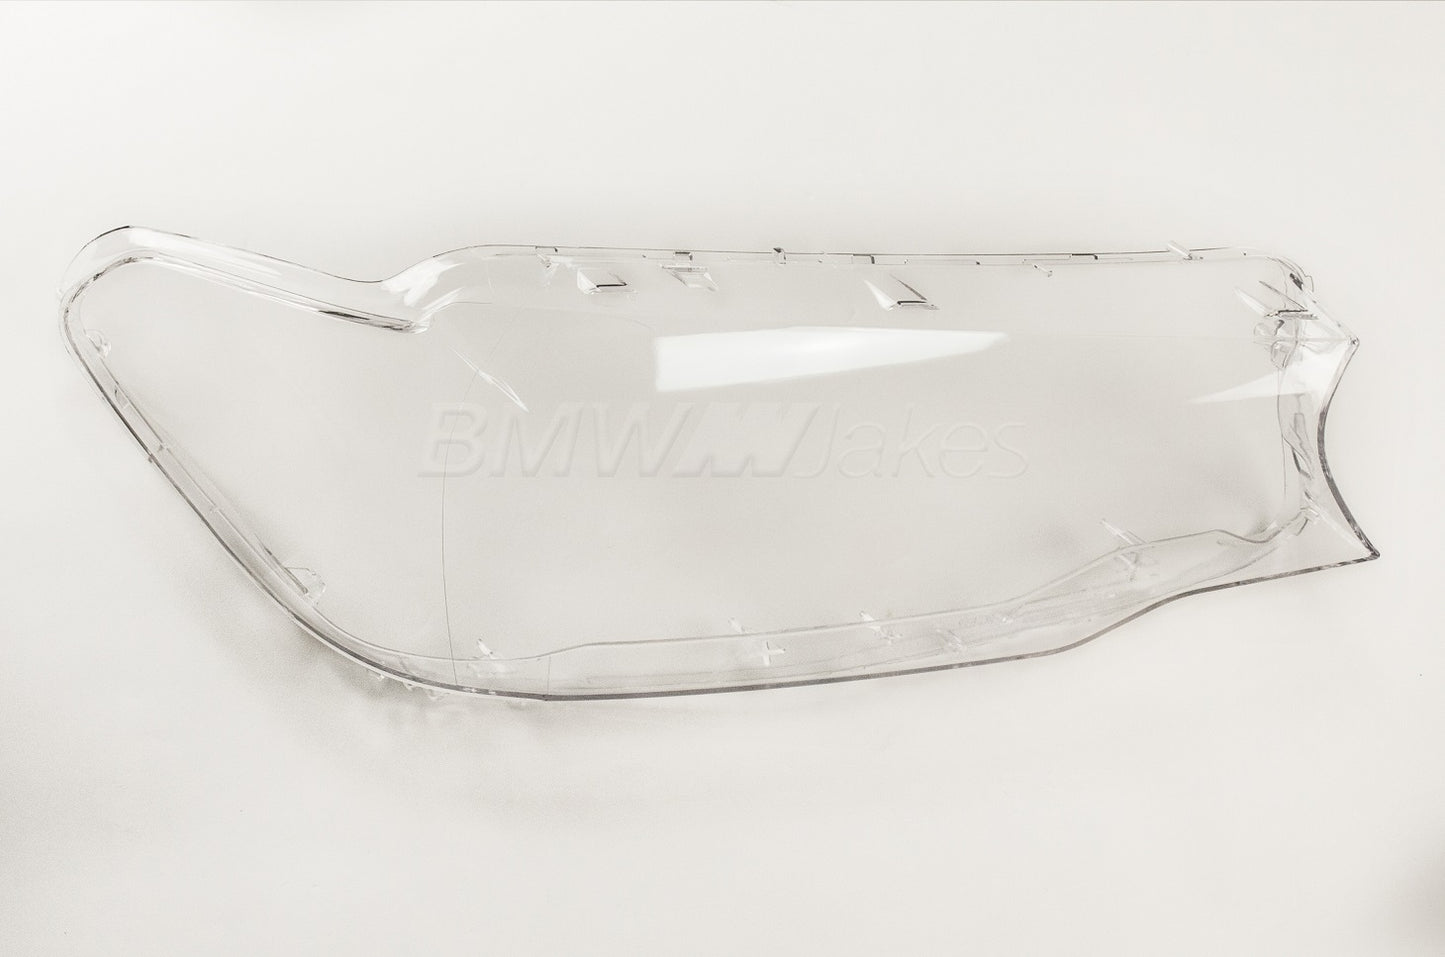 Headlight Lens covers for BMW 5 G30/G31 (2014-2019)